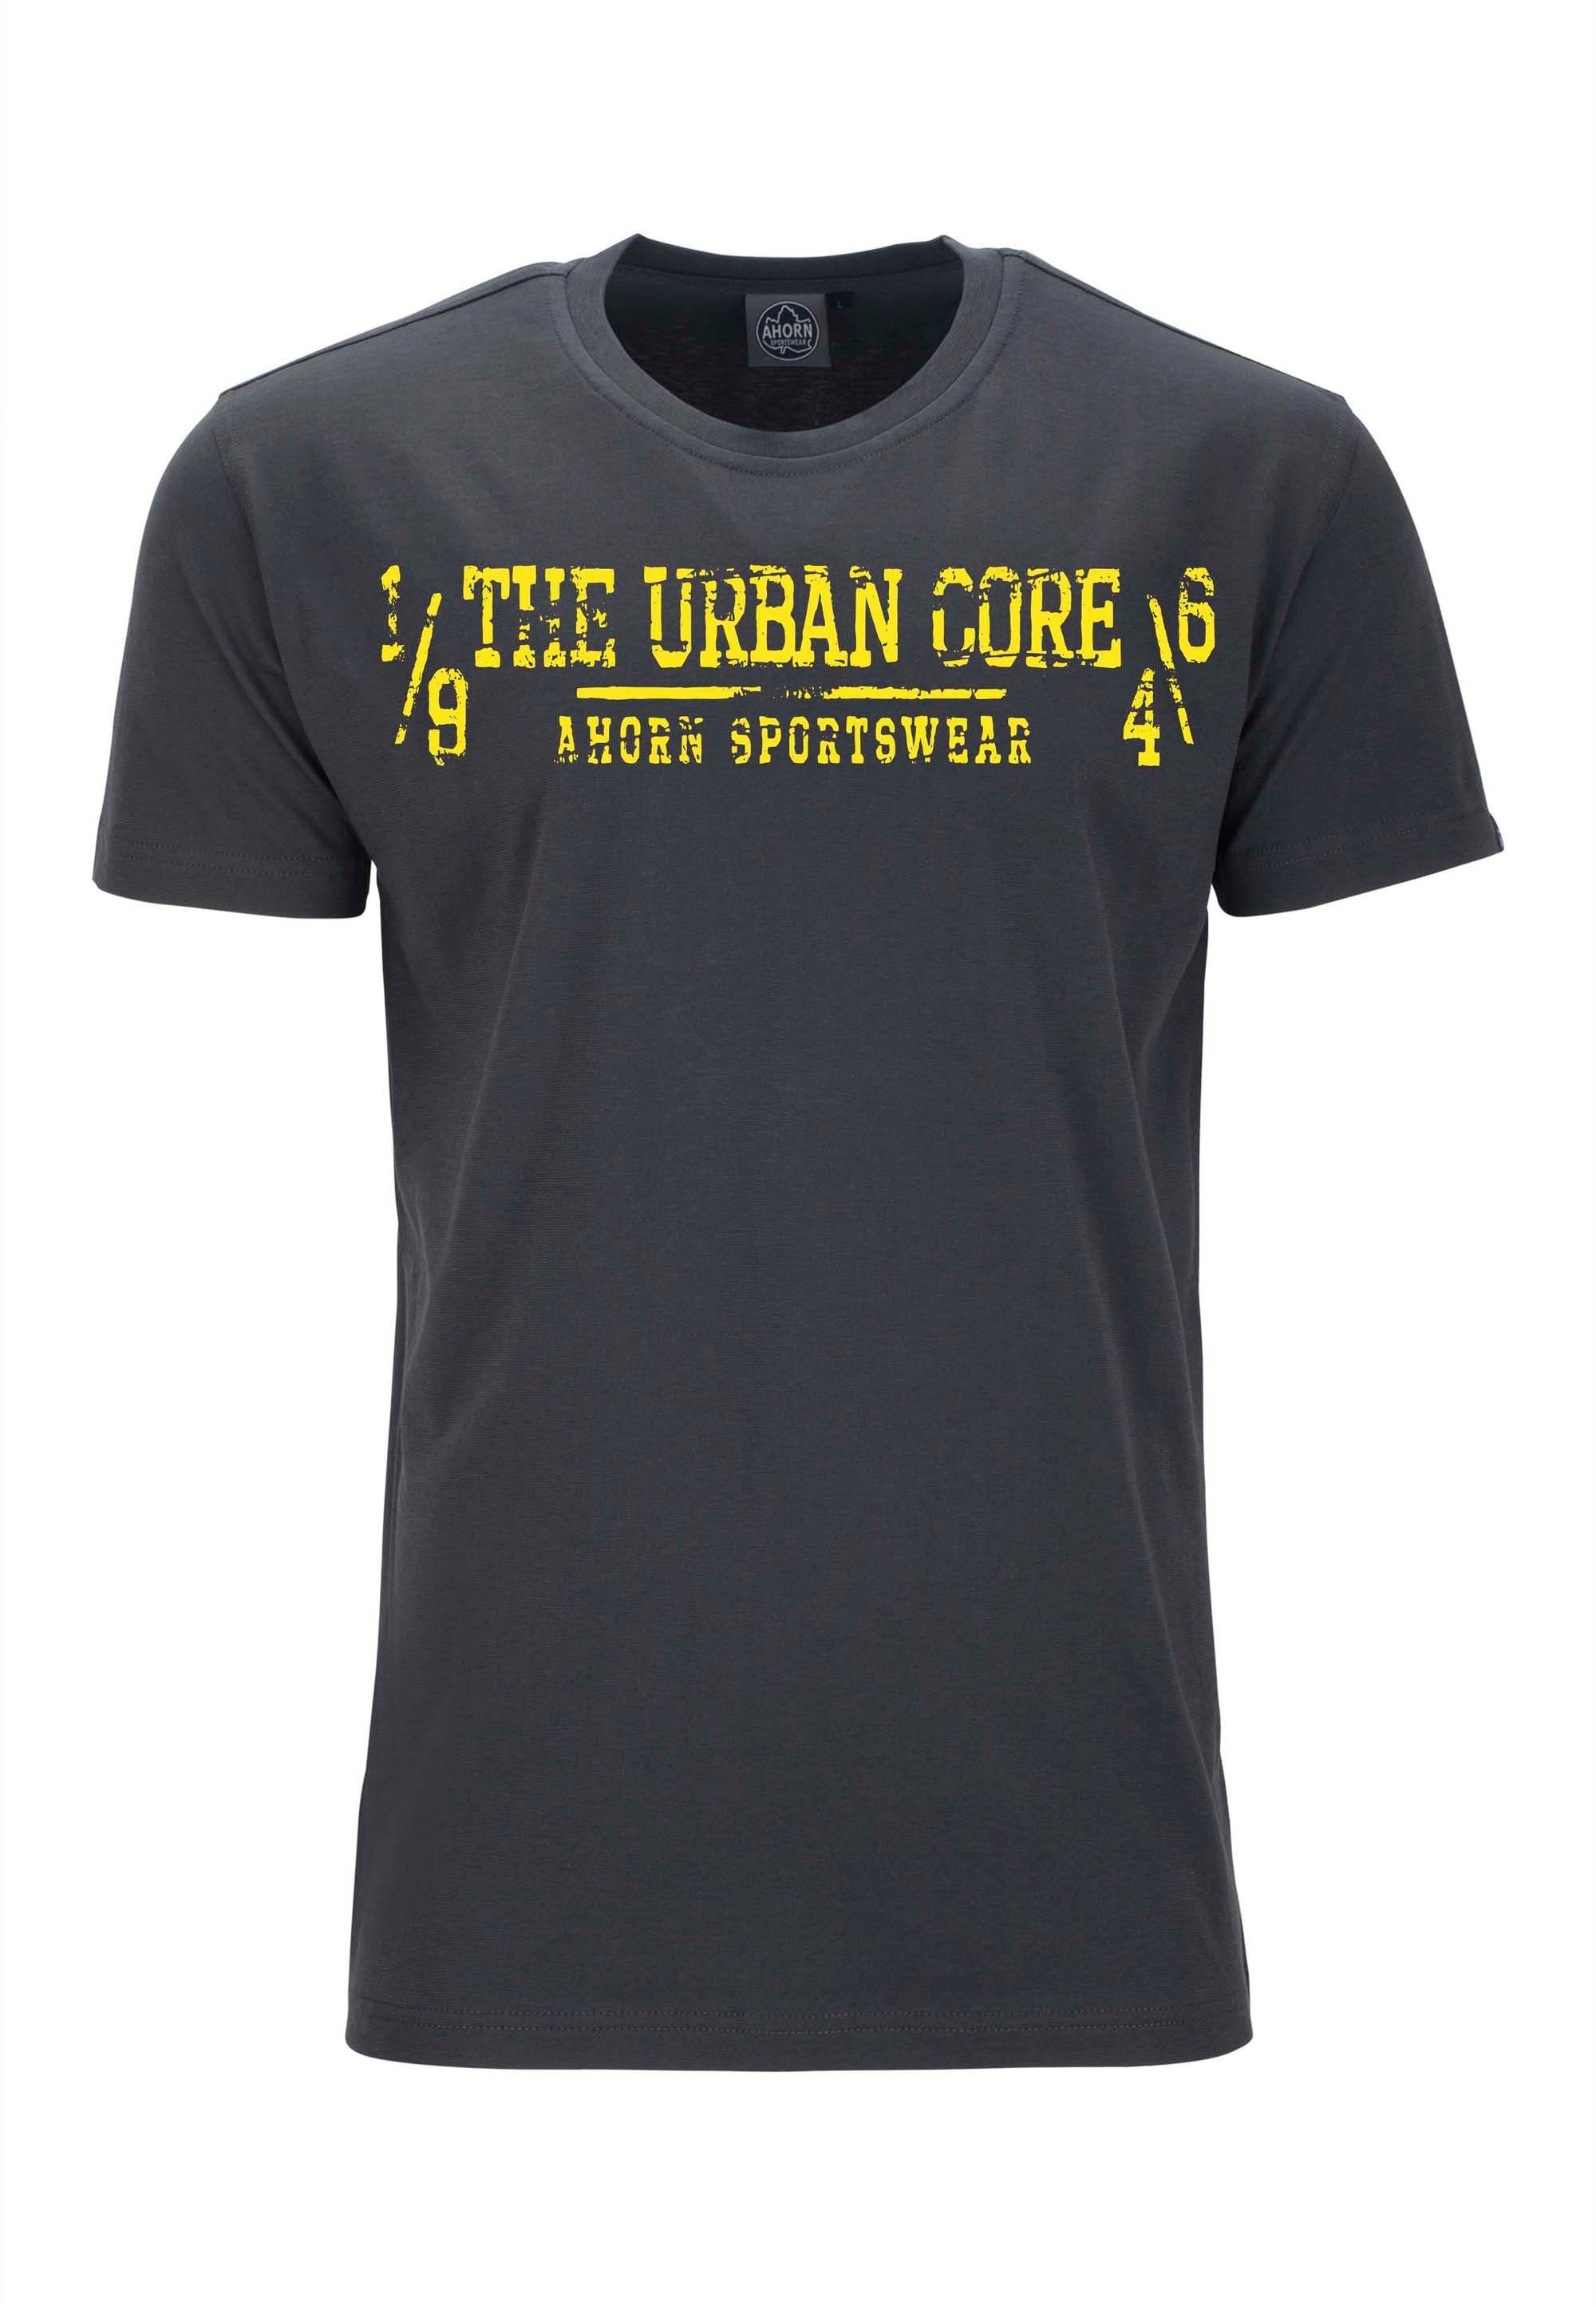 AHORN SPORTSWEAR T-Shirt URBAN CORE mit lässigem Print dunkelgrau